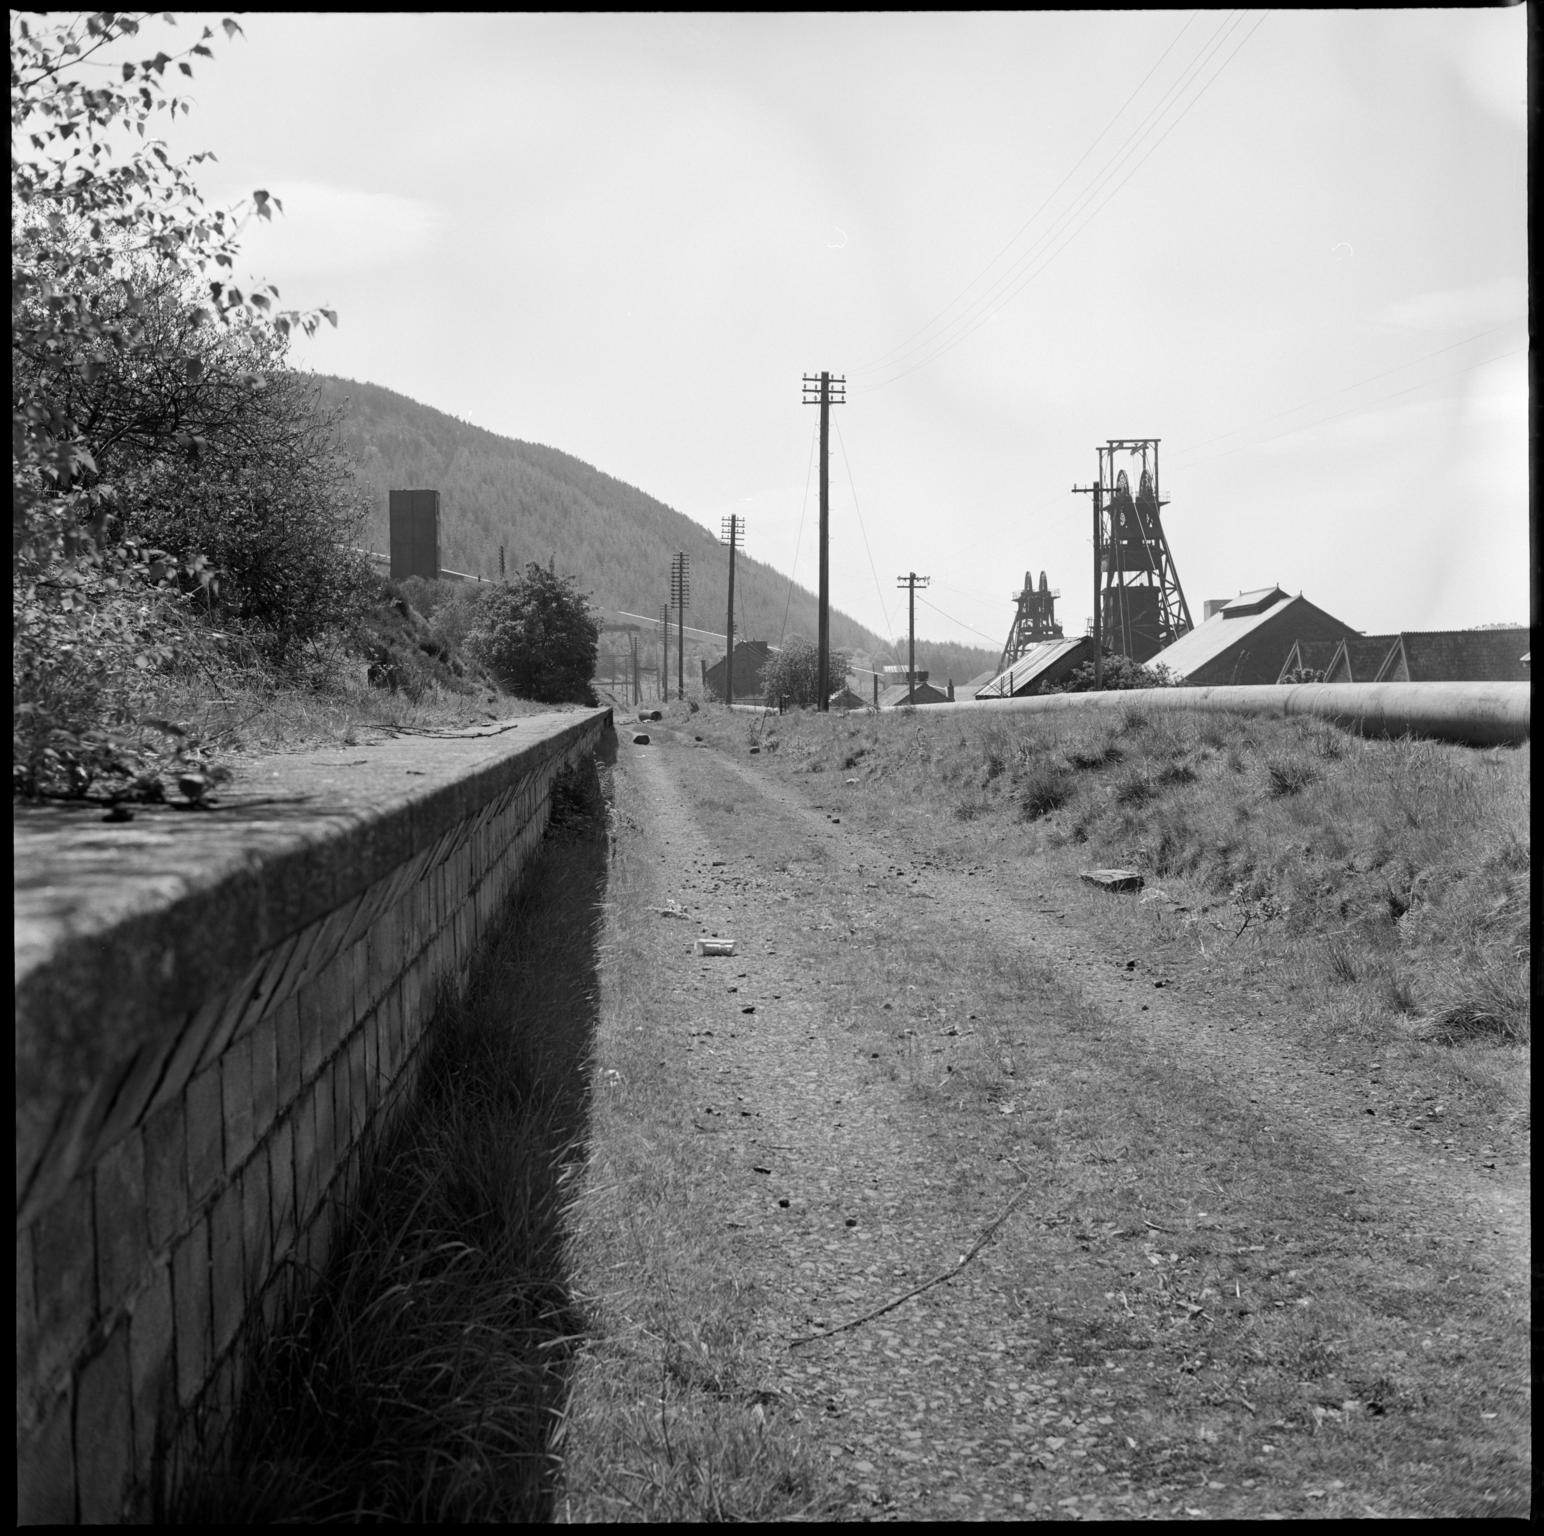 Bargoed Colliery, negative